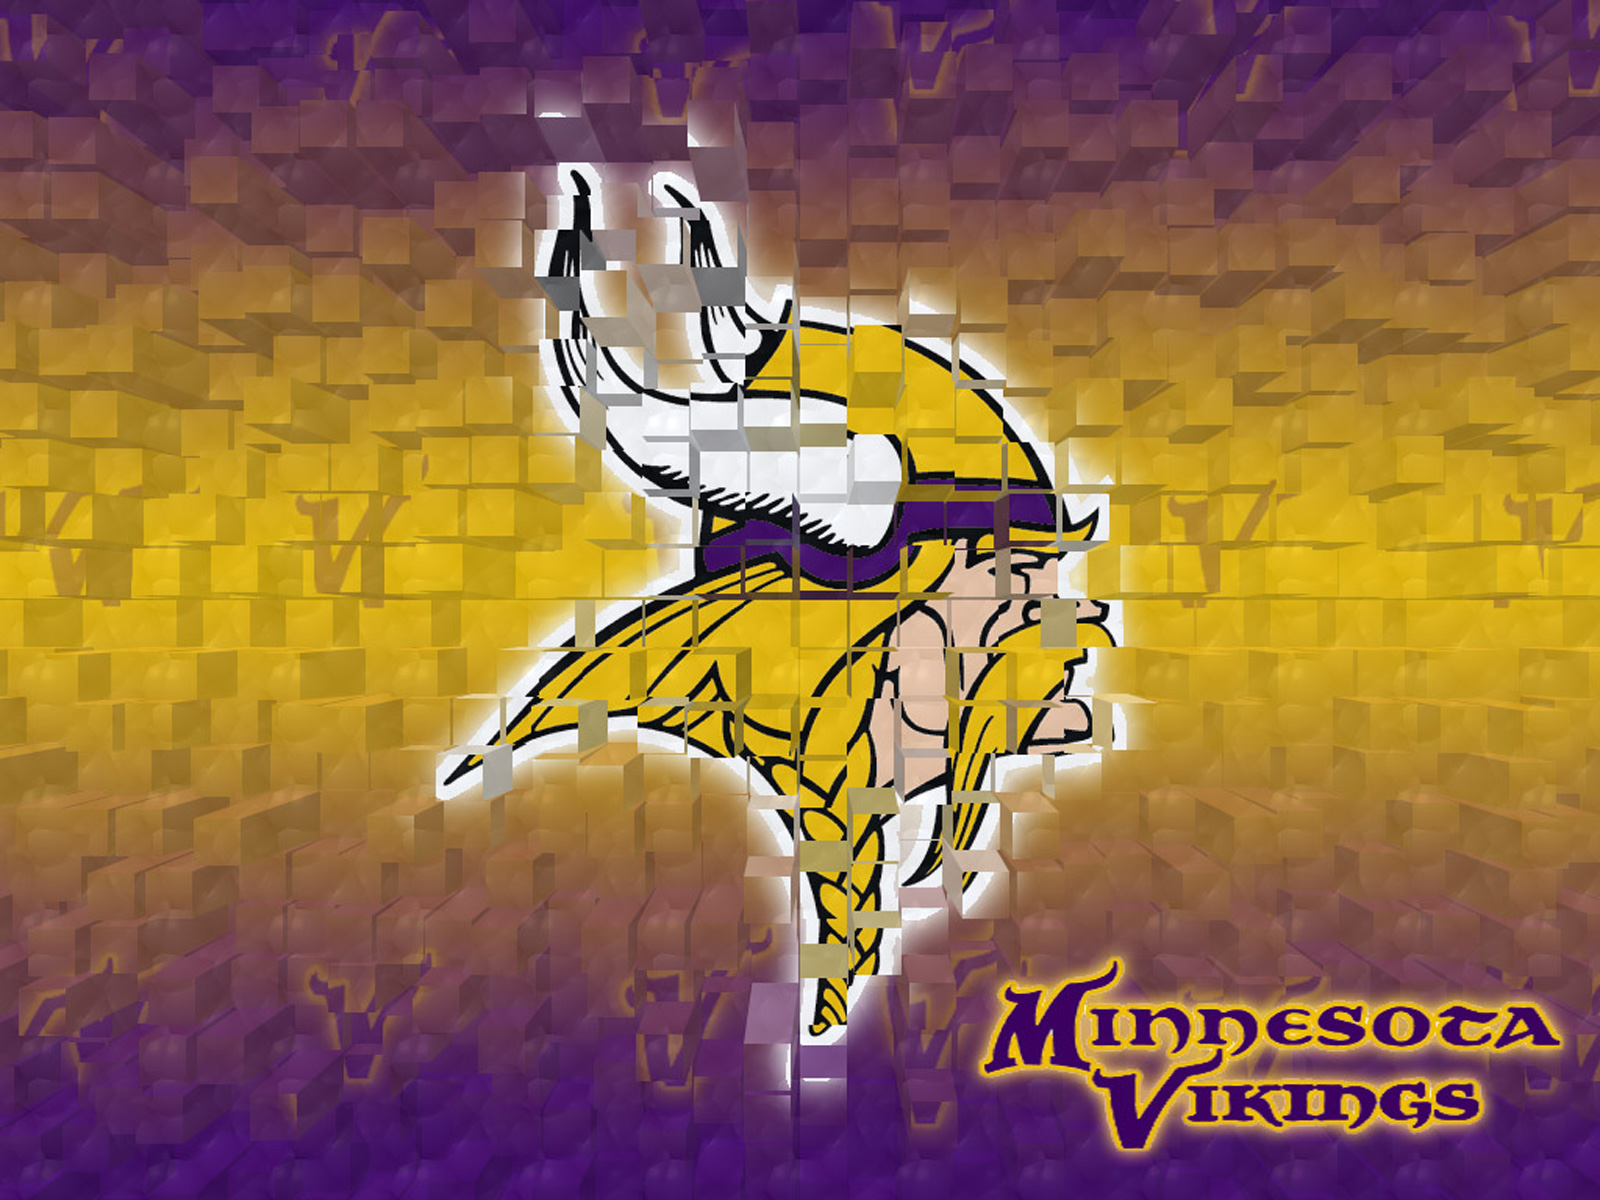 Hot Minnesota Vikings Wallpaper High Quality